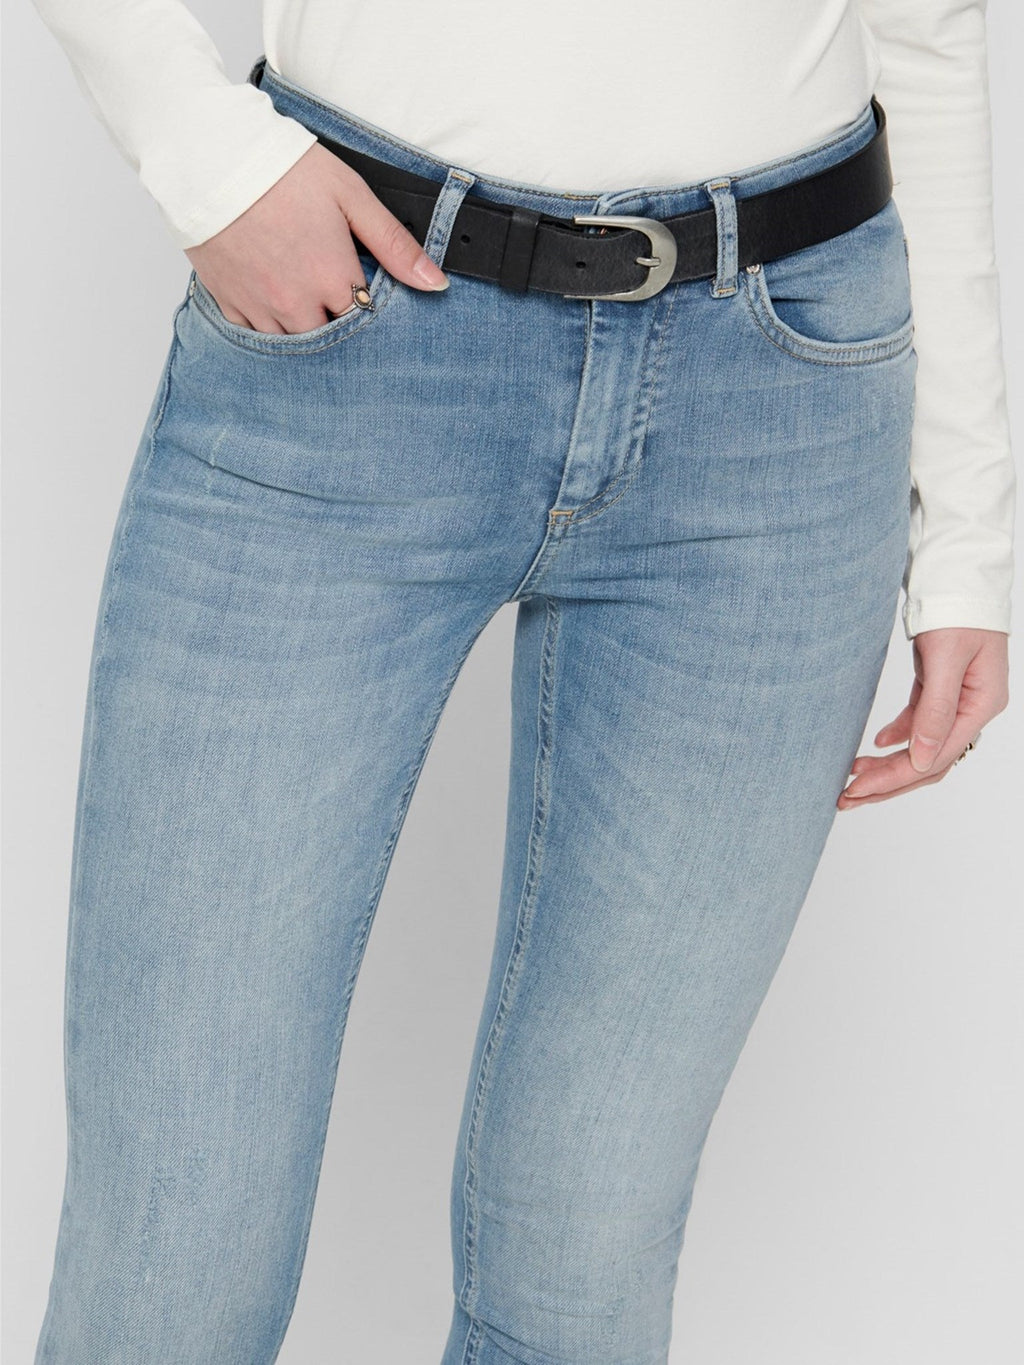 Erröten mittlere Jeans - hellblauer Jeans